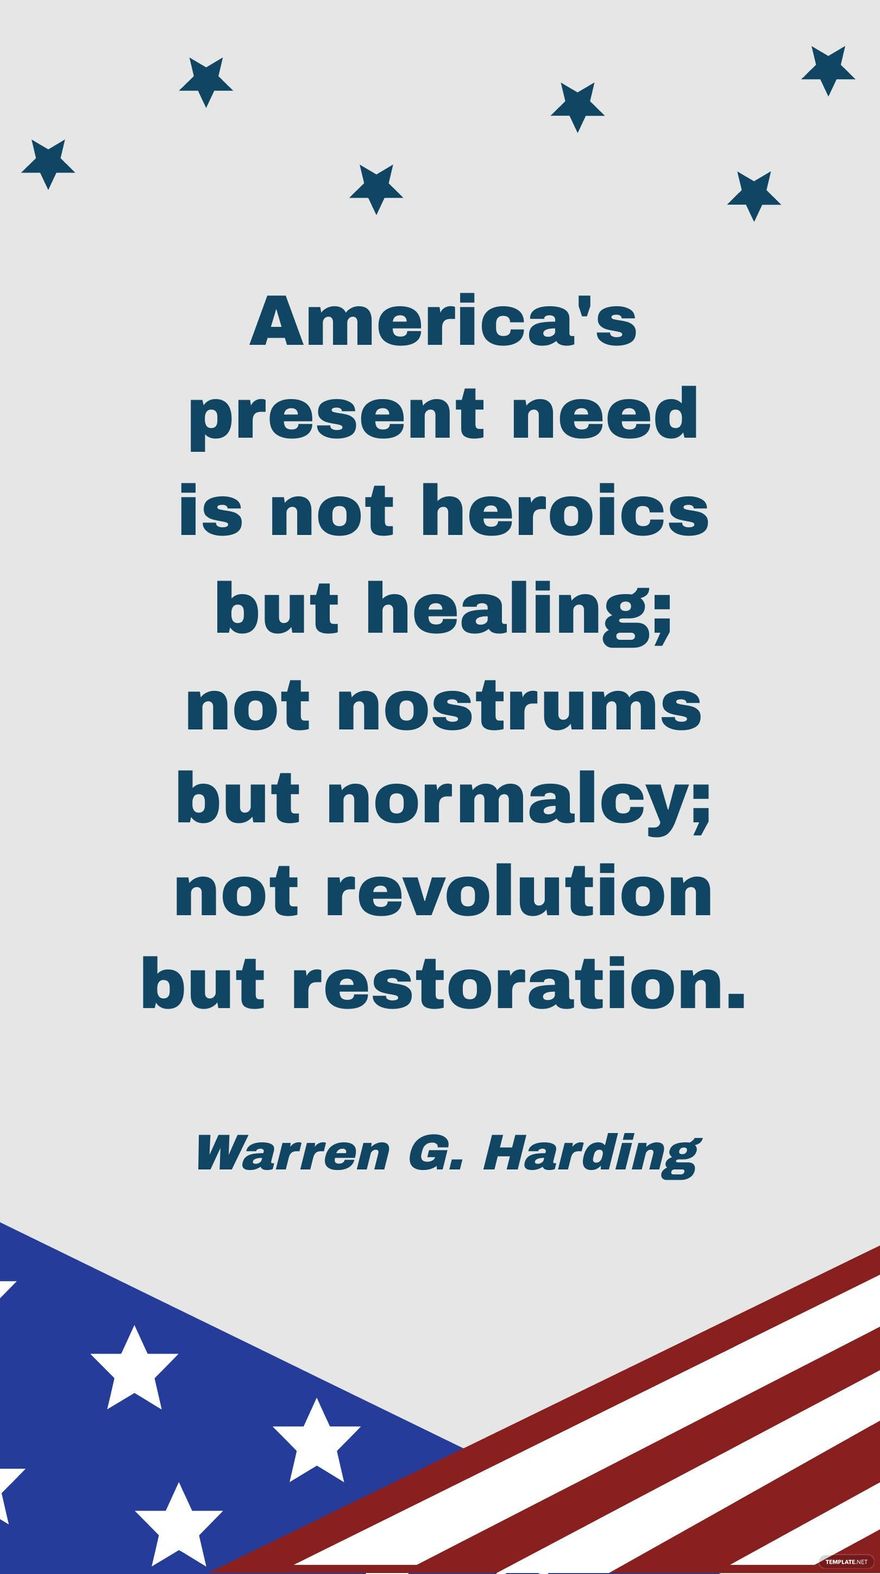 Warren G. Harding - America's present need is not heroics but healing; not nostrums but normalcy; not revolution but restoration.